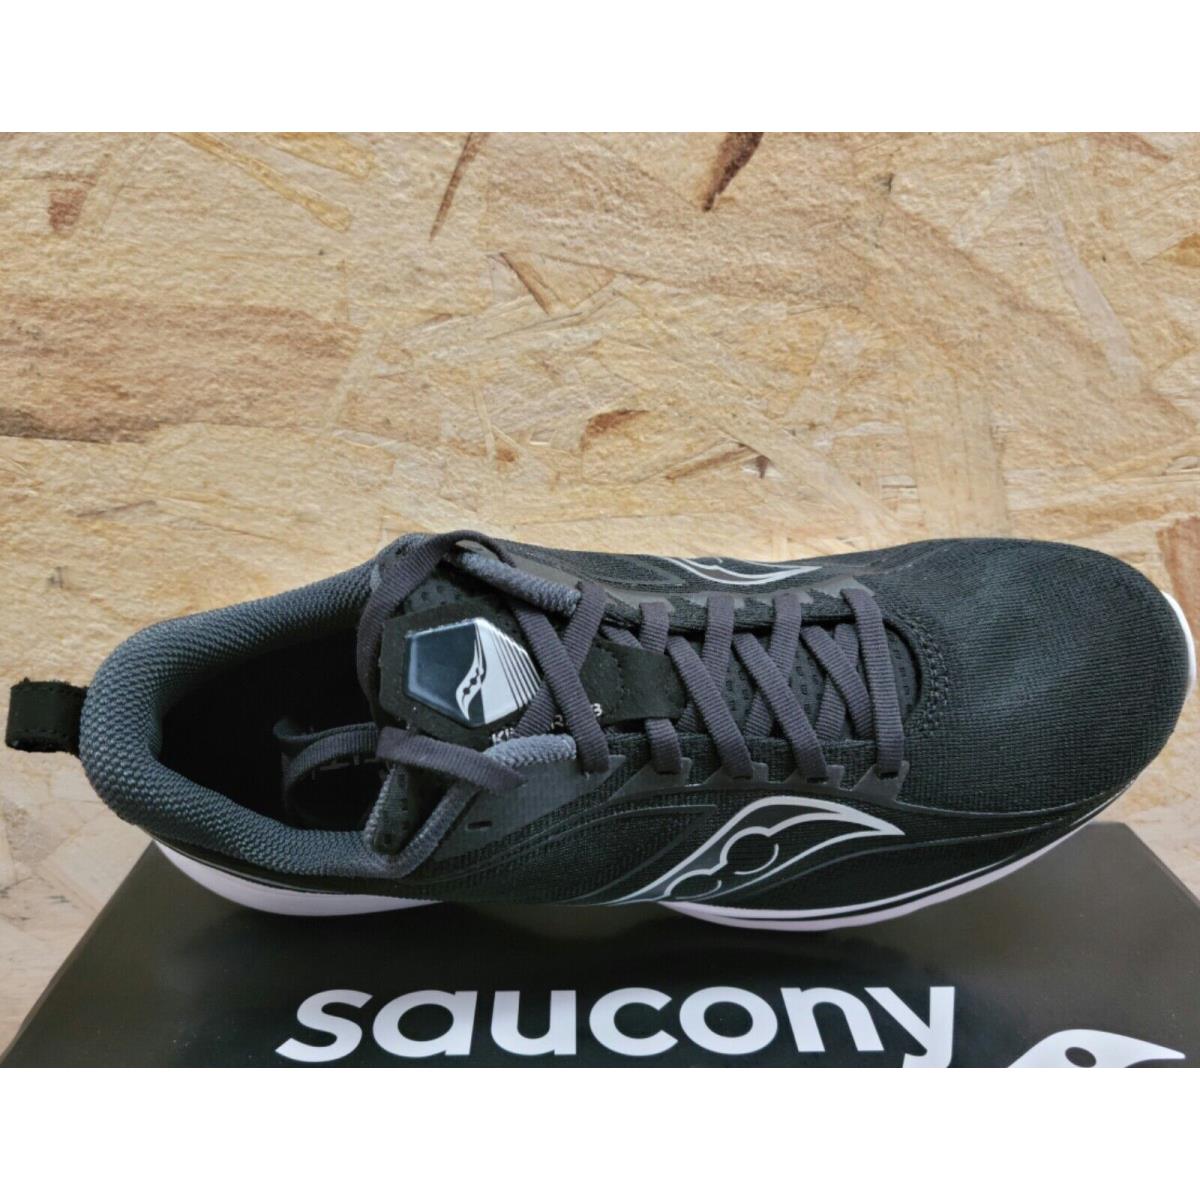 Saucony shoes Kinvara - Black 2